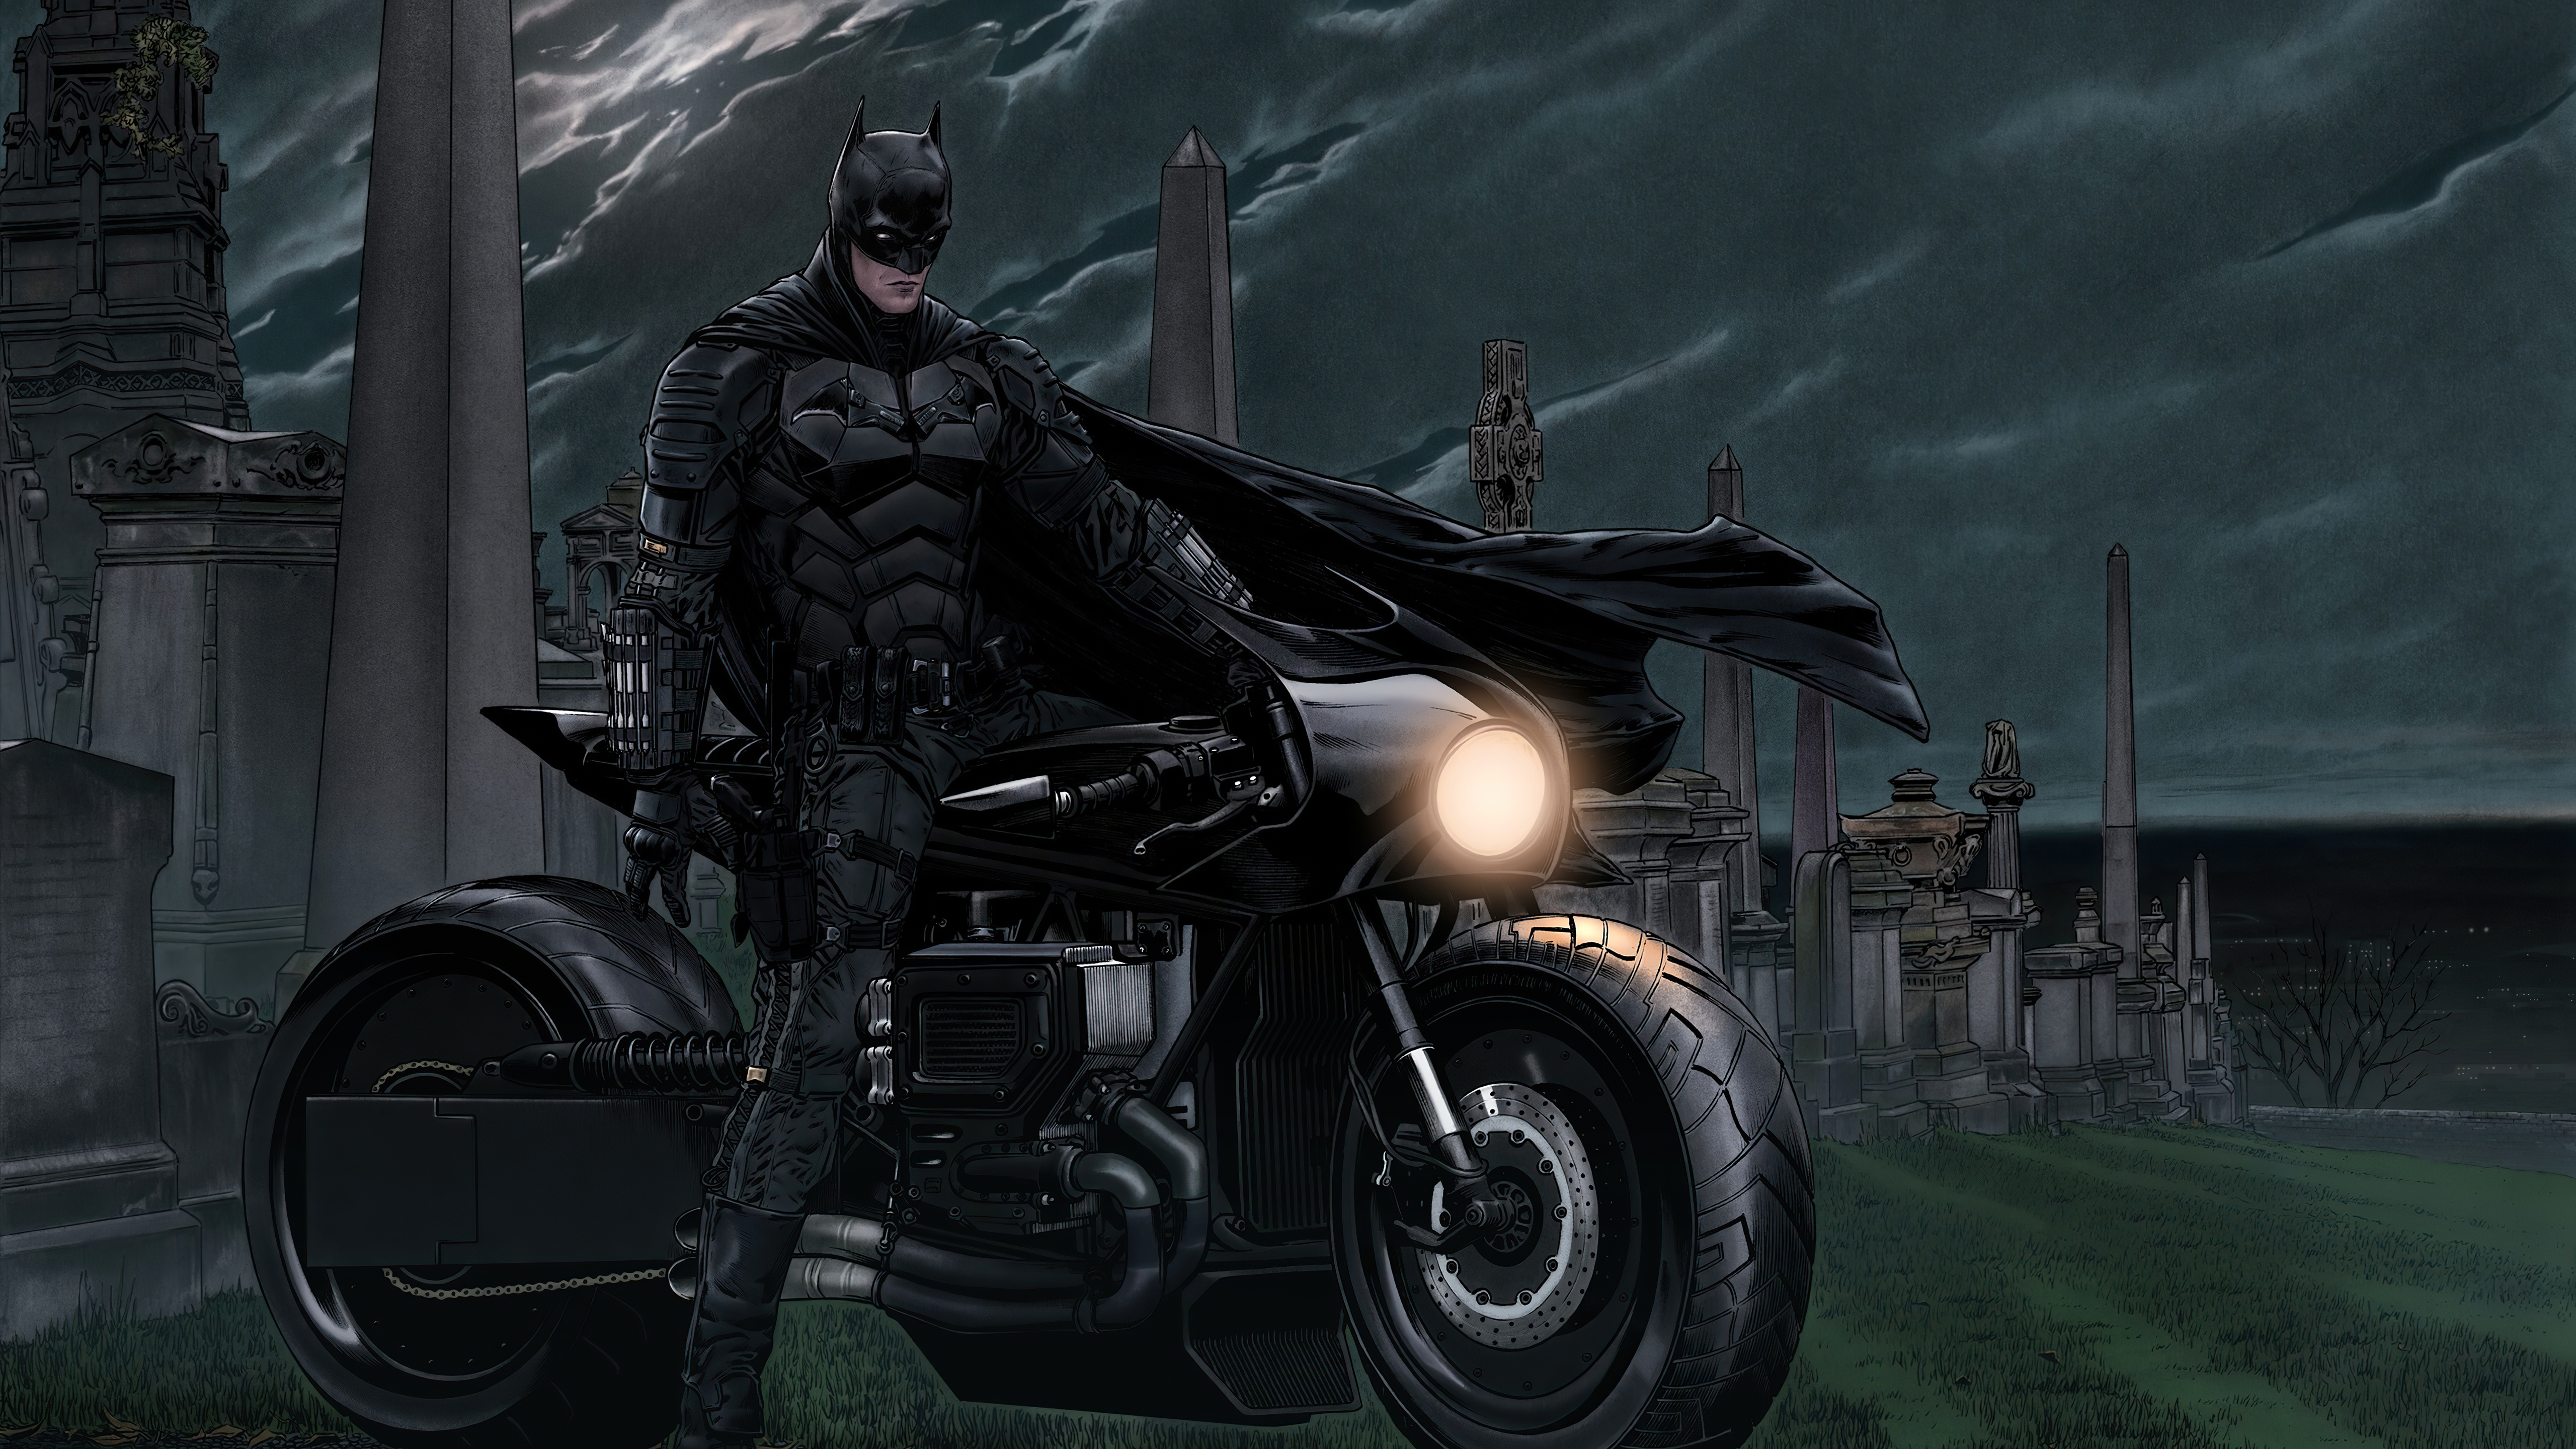 Batman 4k Ultra HD Wallpaper by garnabiuth